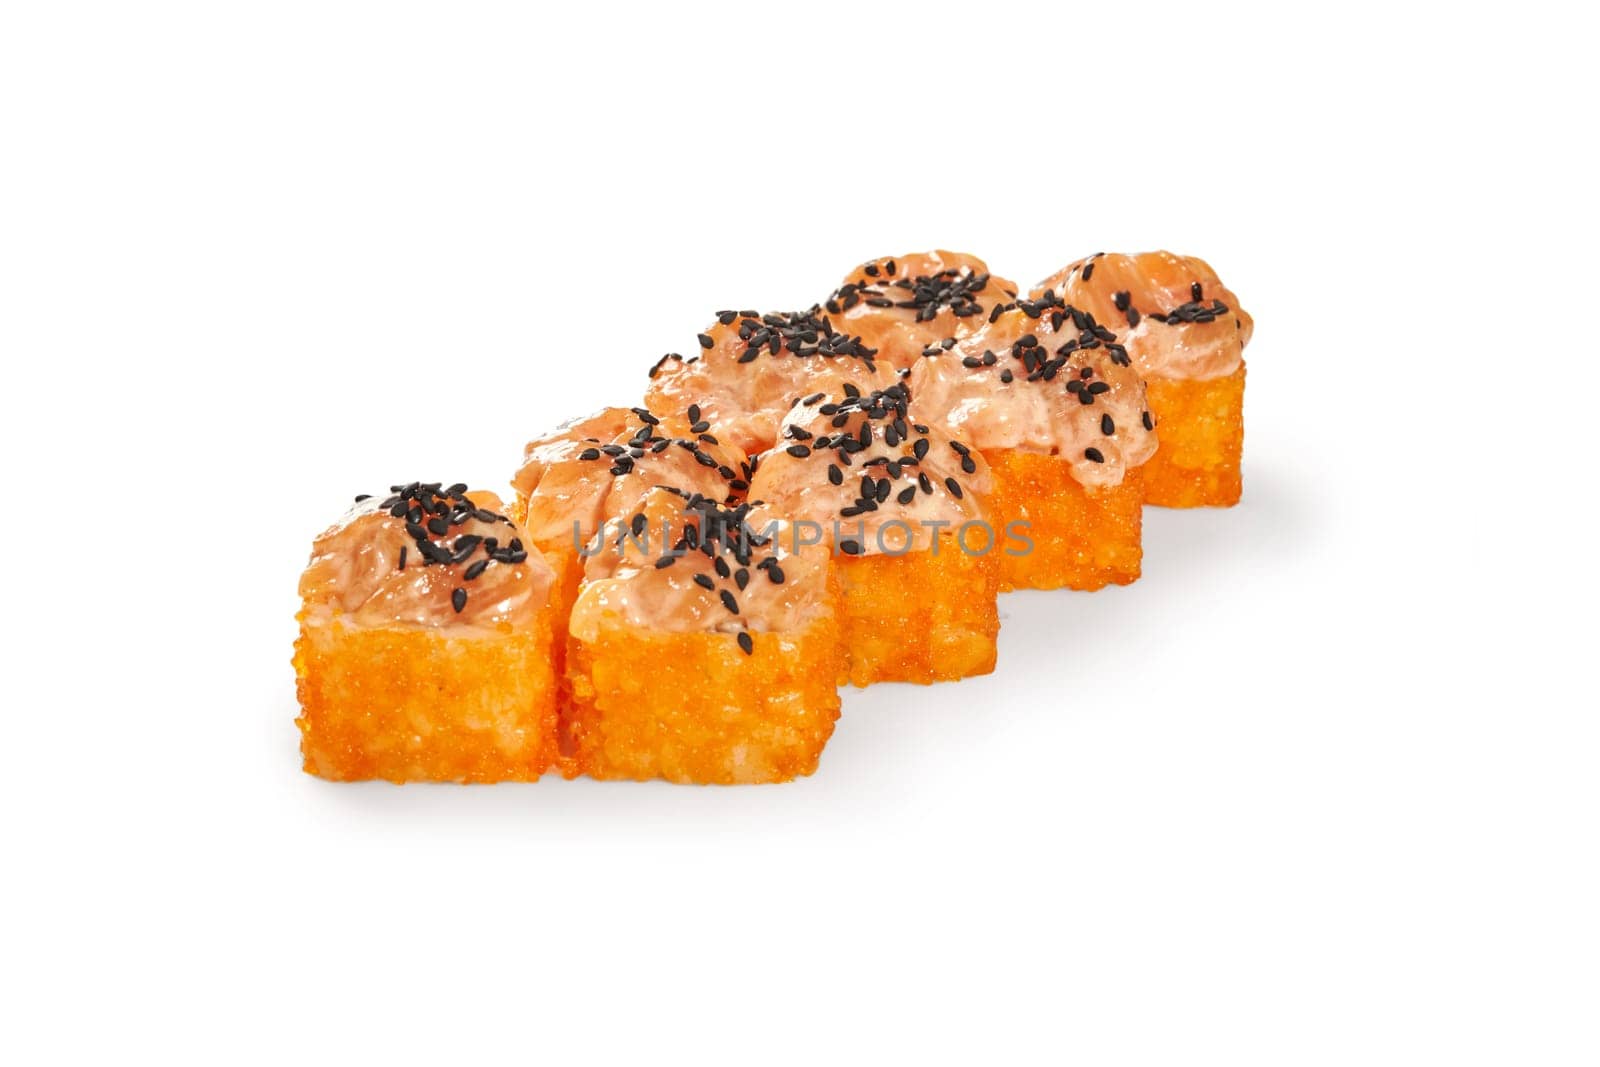 Sushi rolls with tobiko, salmon tartare and black sesame by nazarovsergey